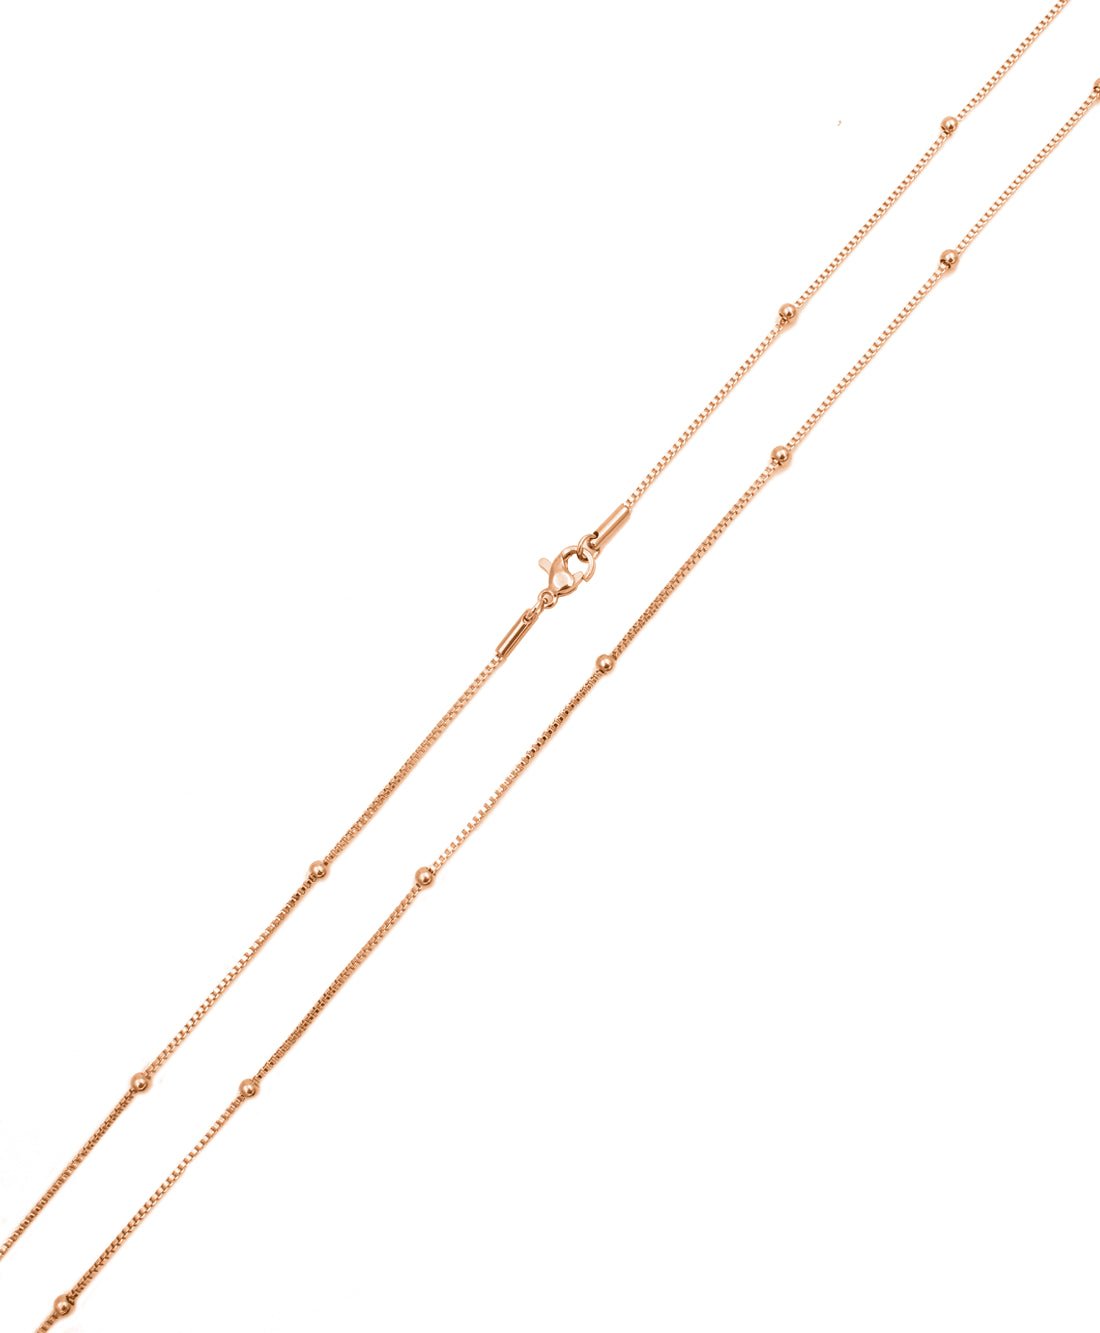 Long necklace / Necklace - Rose Gold - Pregnancy bola 110cm